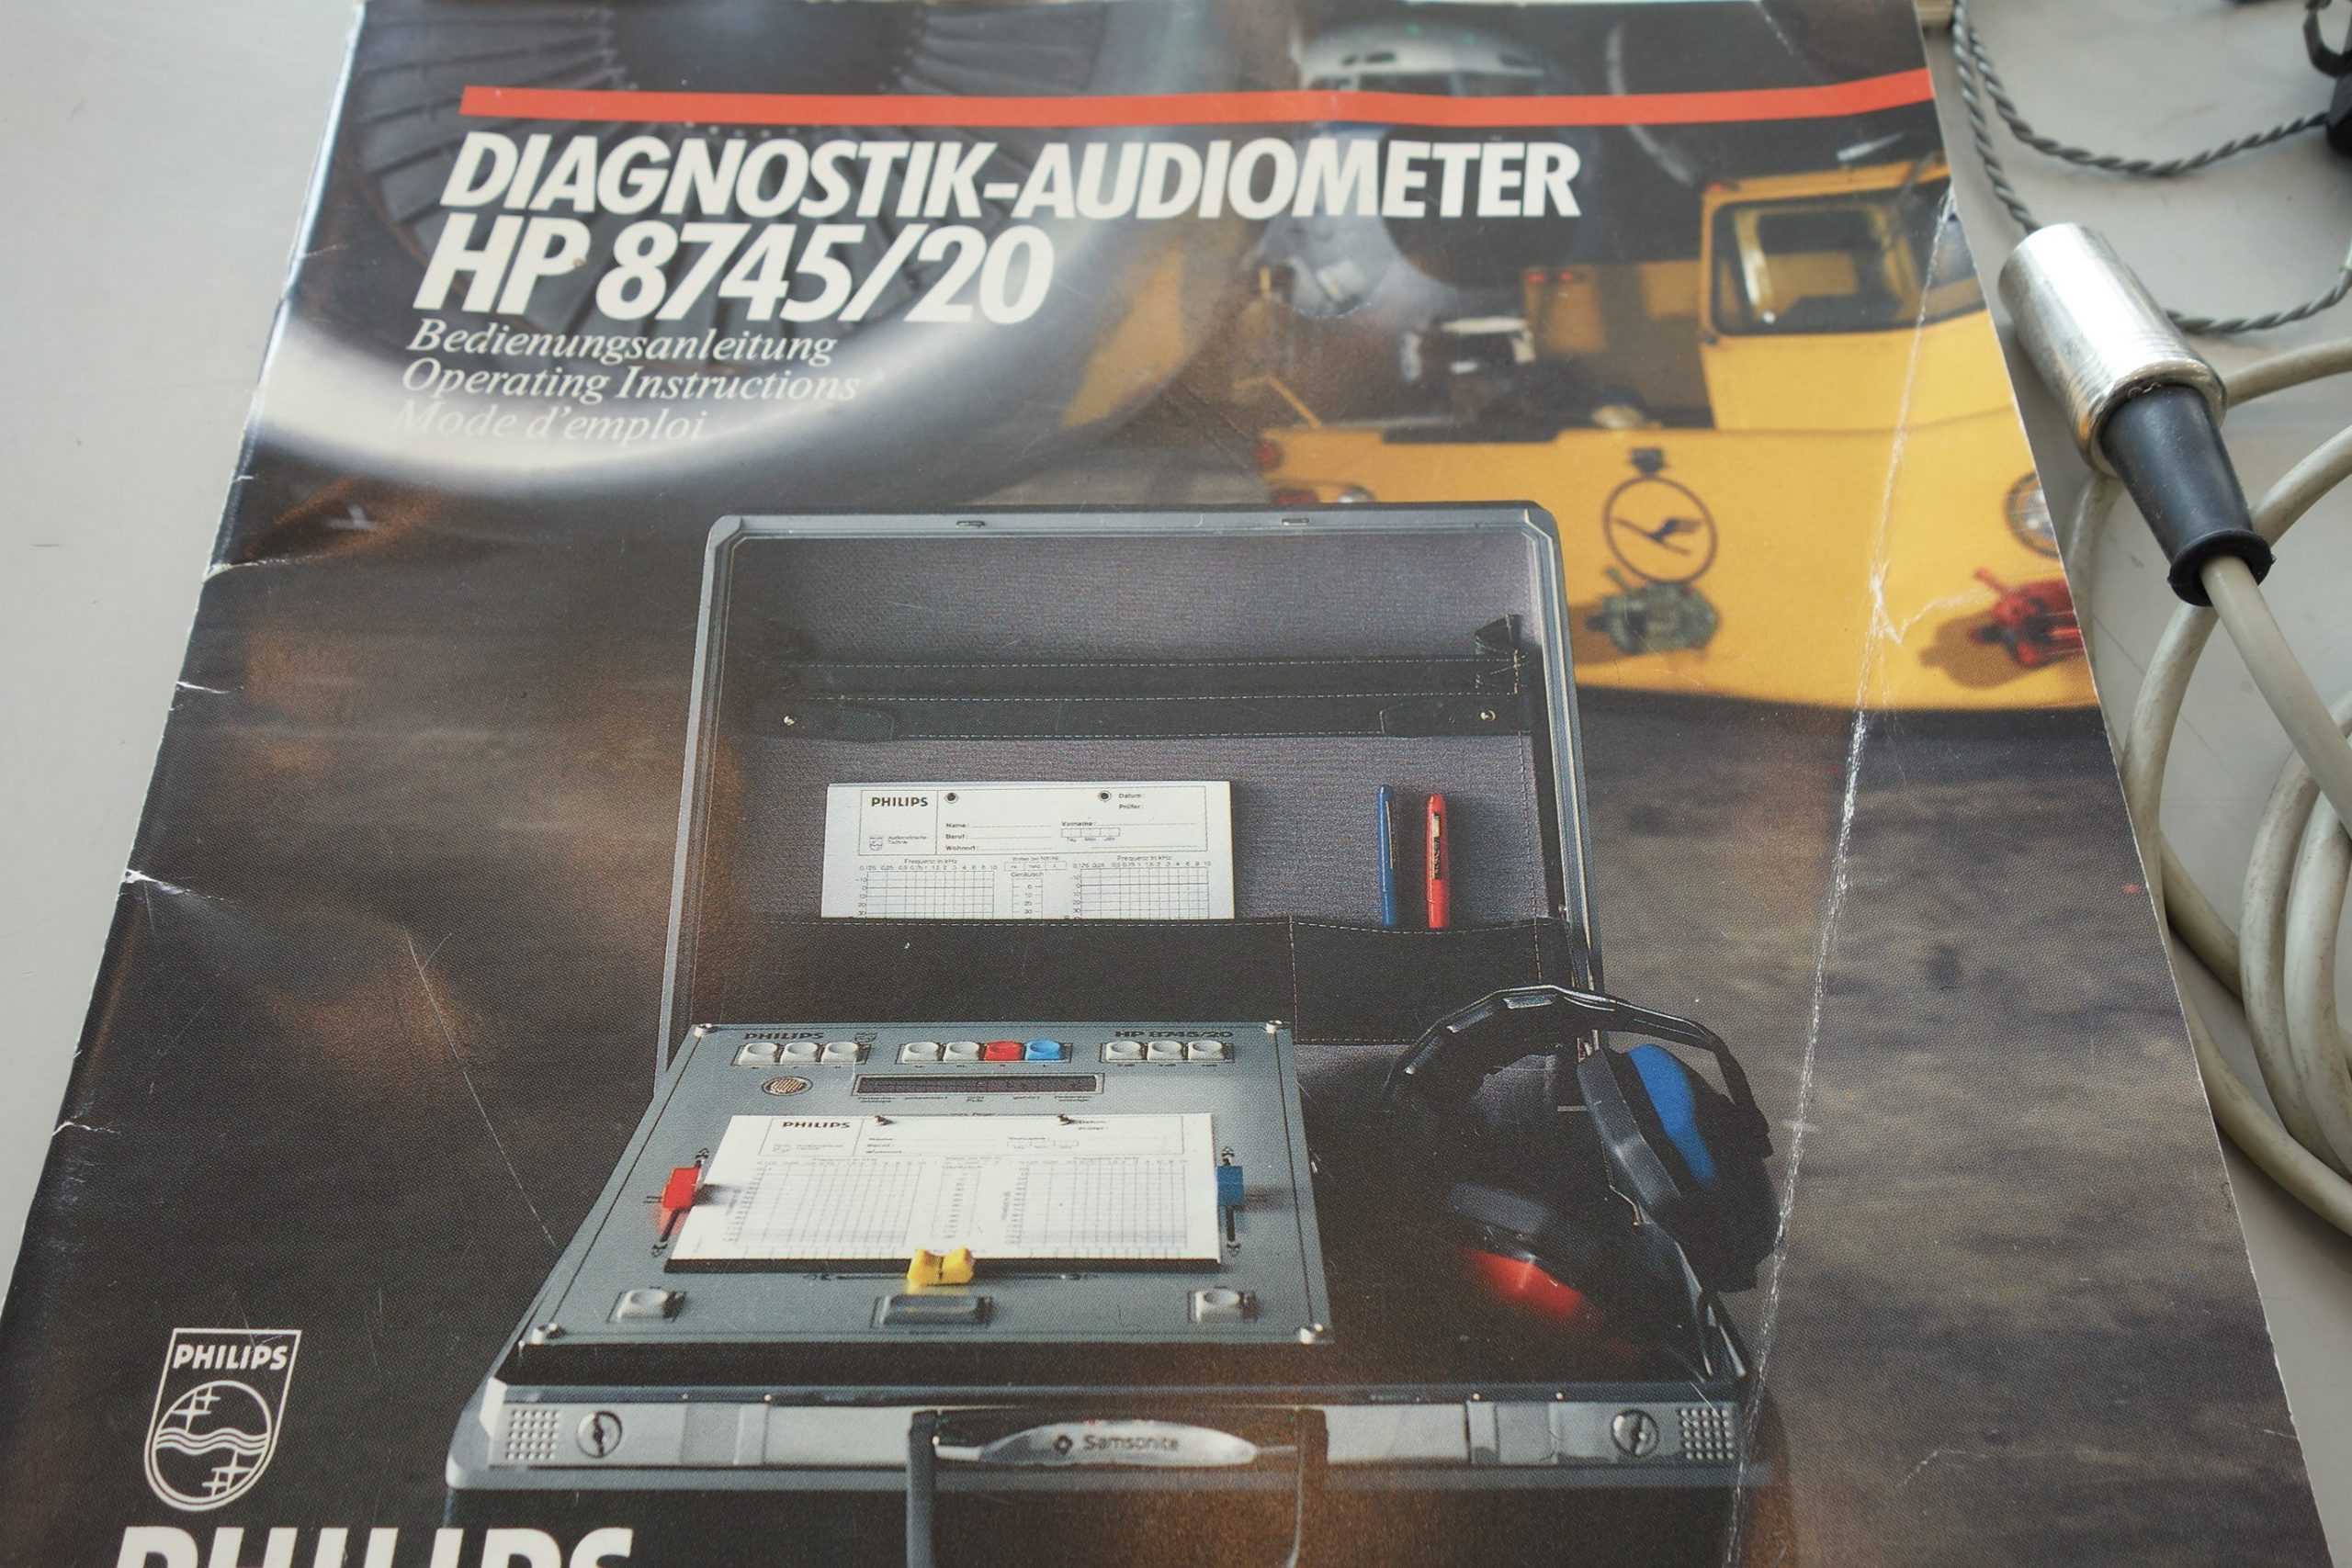 philips-hp-8745-20-audiometer-kopfhoerer-patiententaster-4076